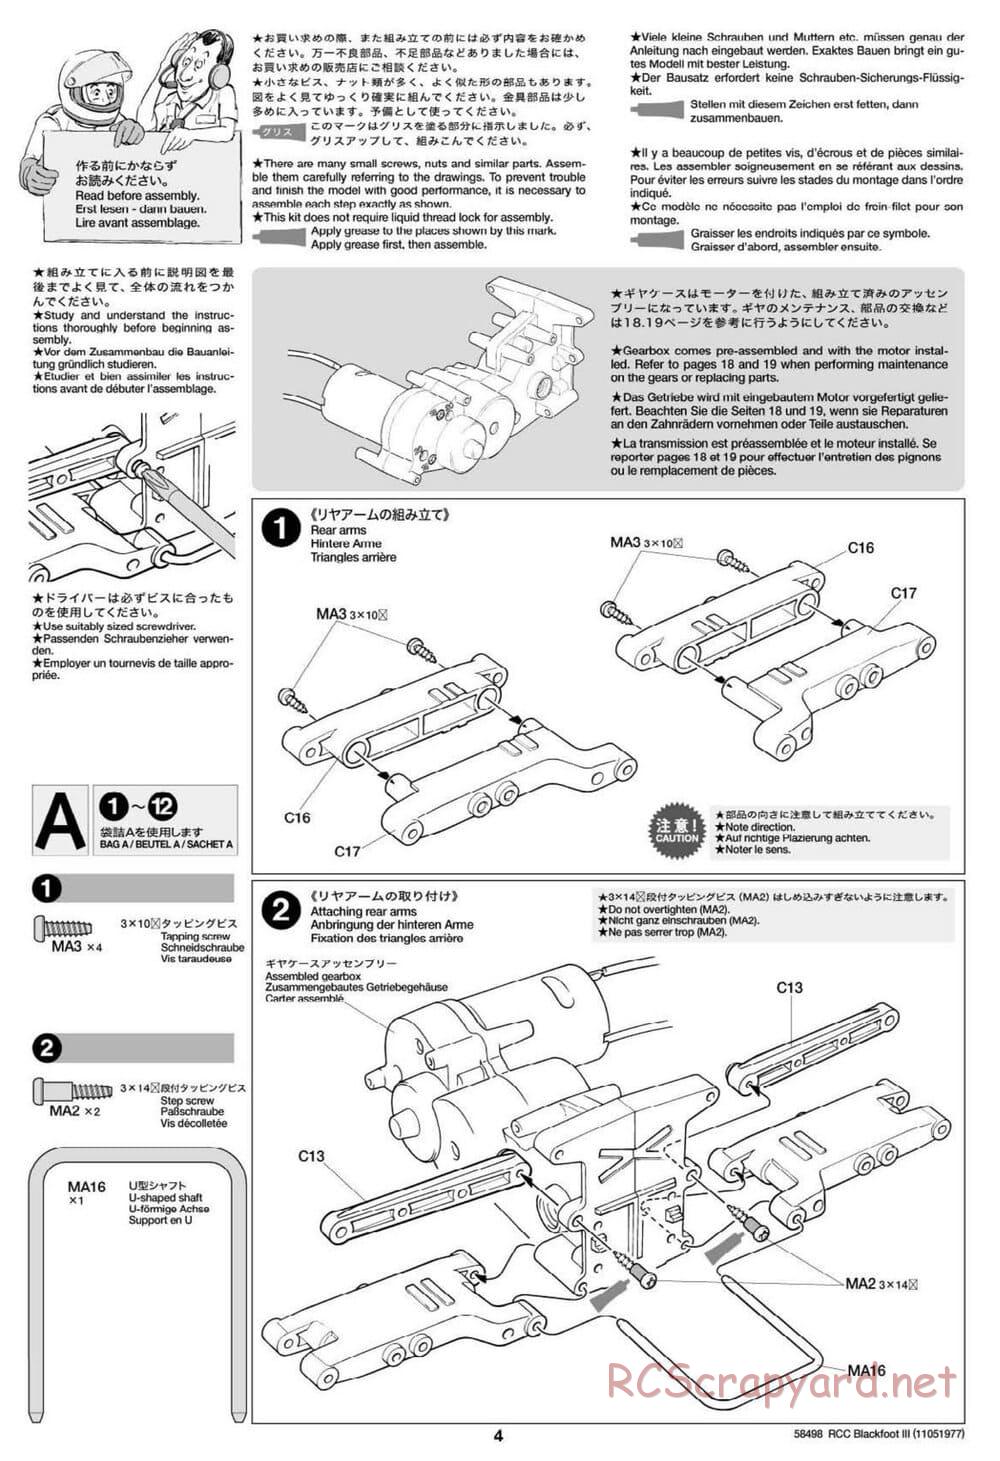 Tamiya - Blackfoot III - WT-01 Chassis - Manual - Page 4